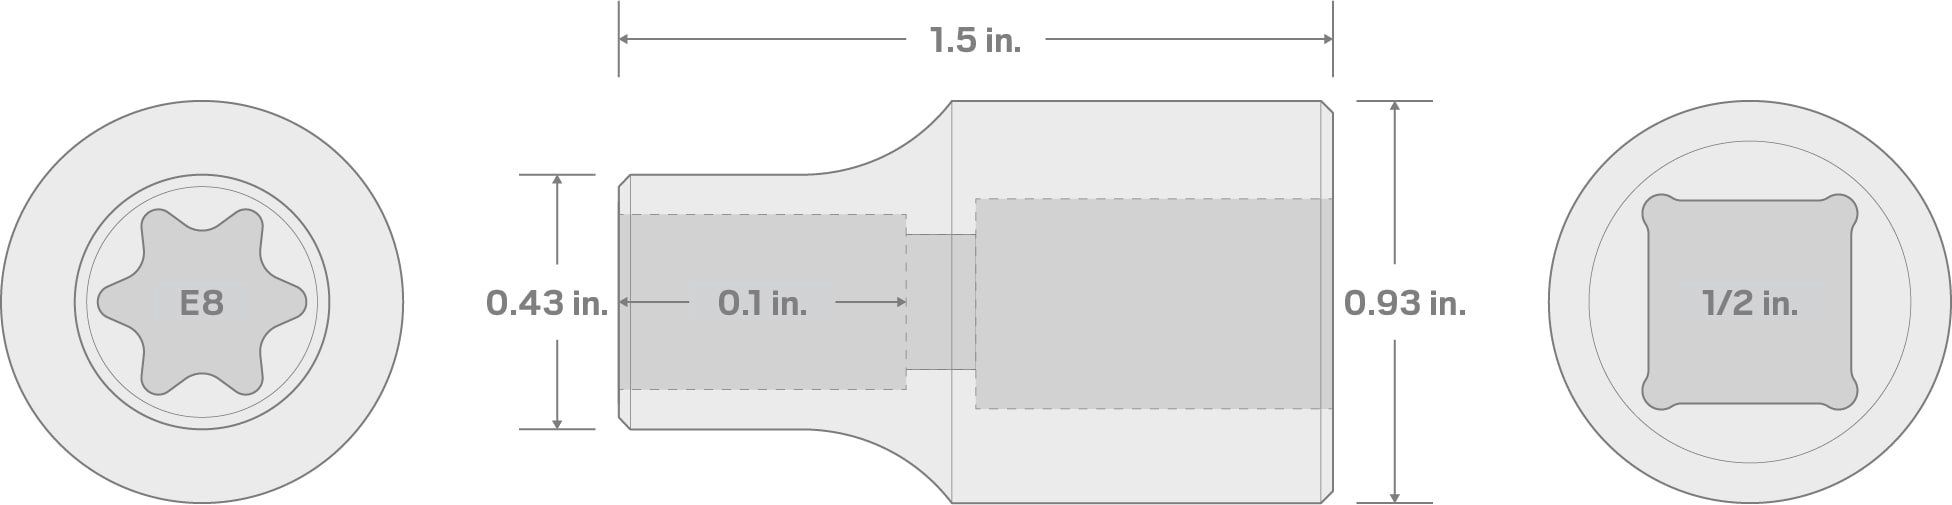 Specs for 1/2 Inch Drive x E8 External Star Socket